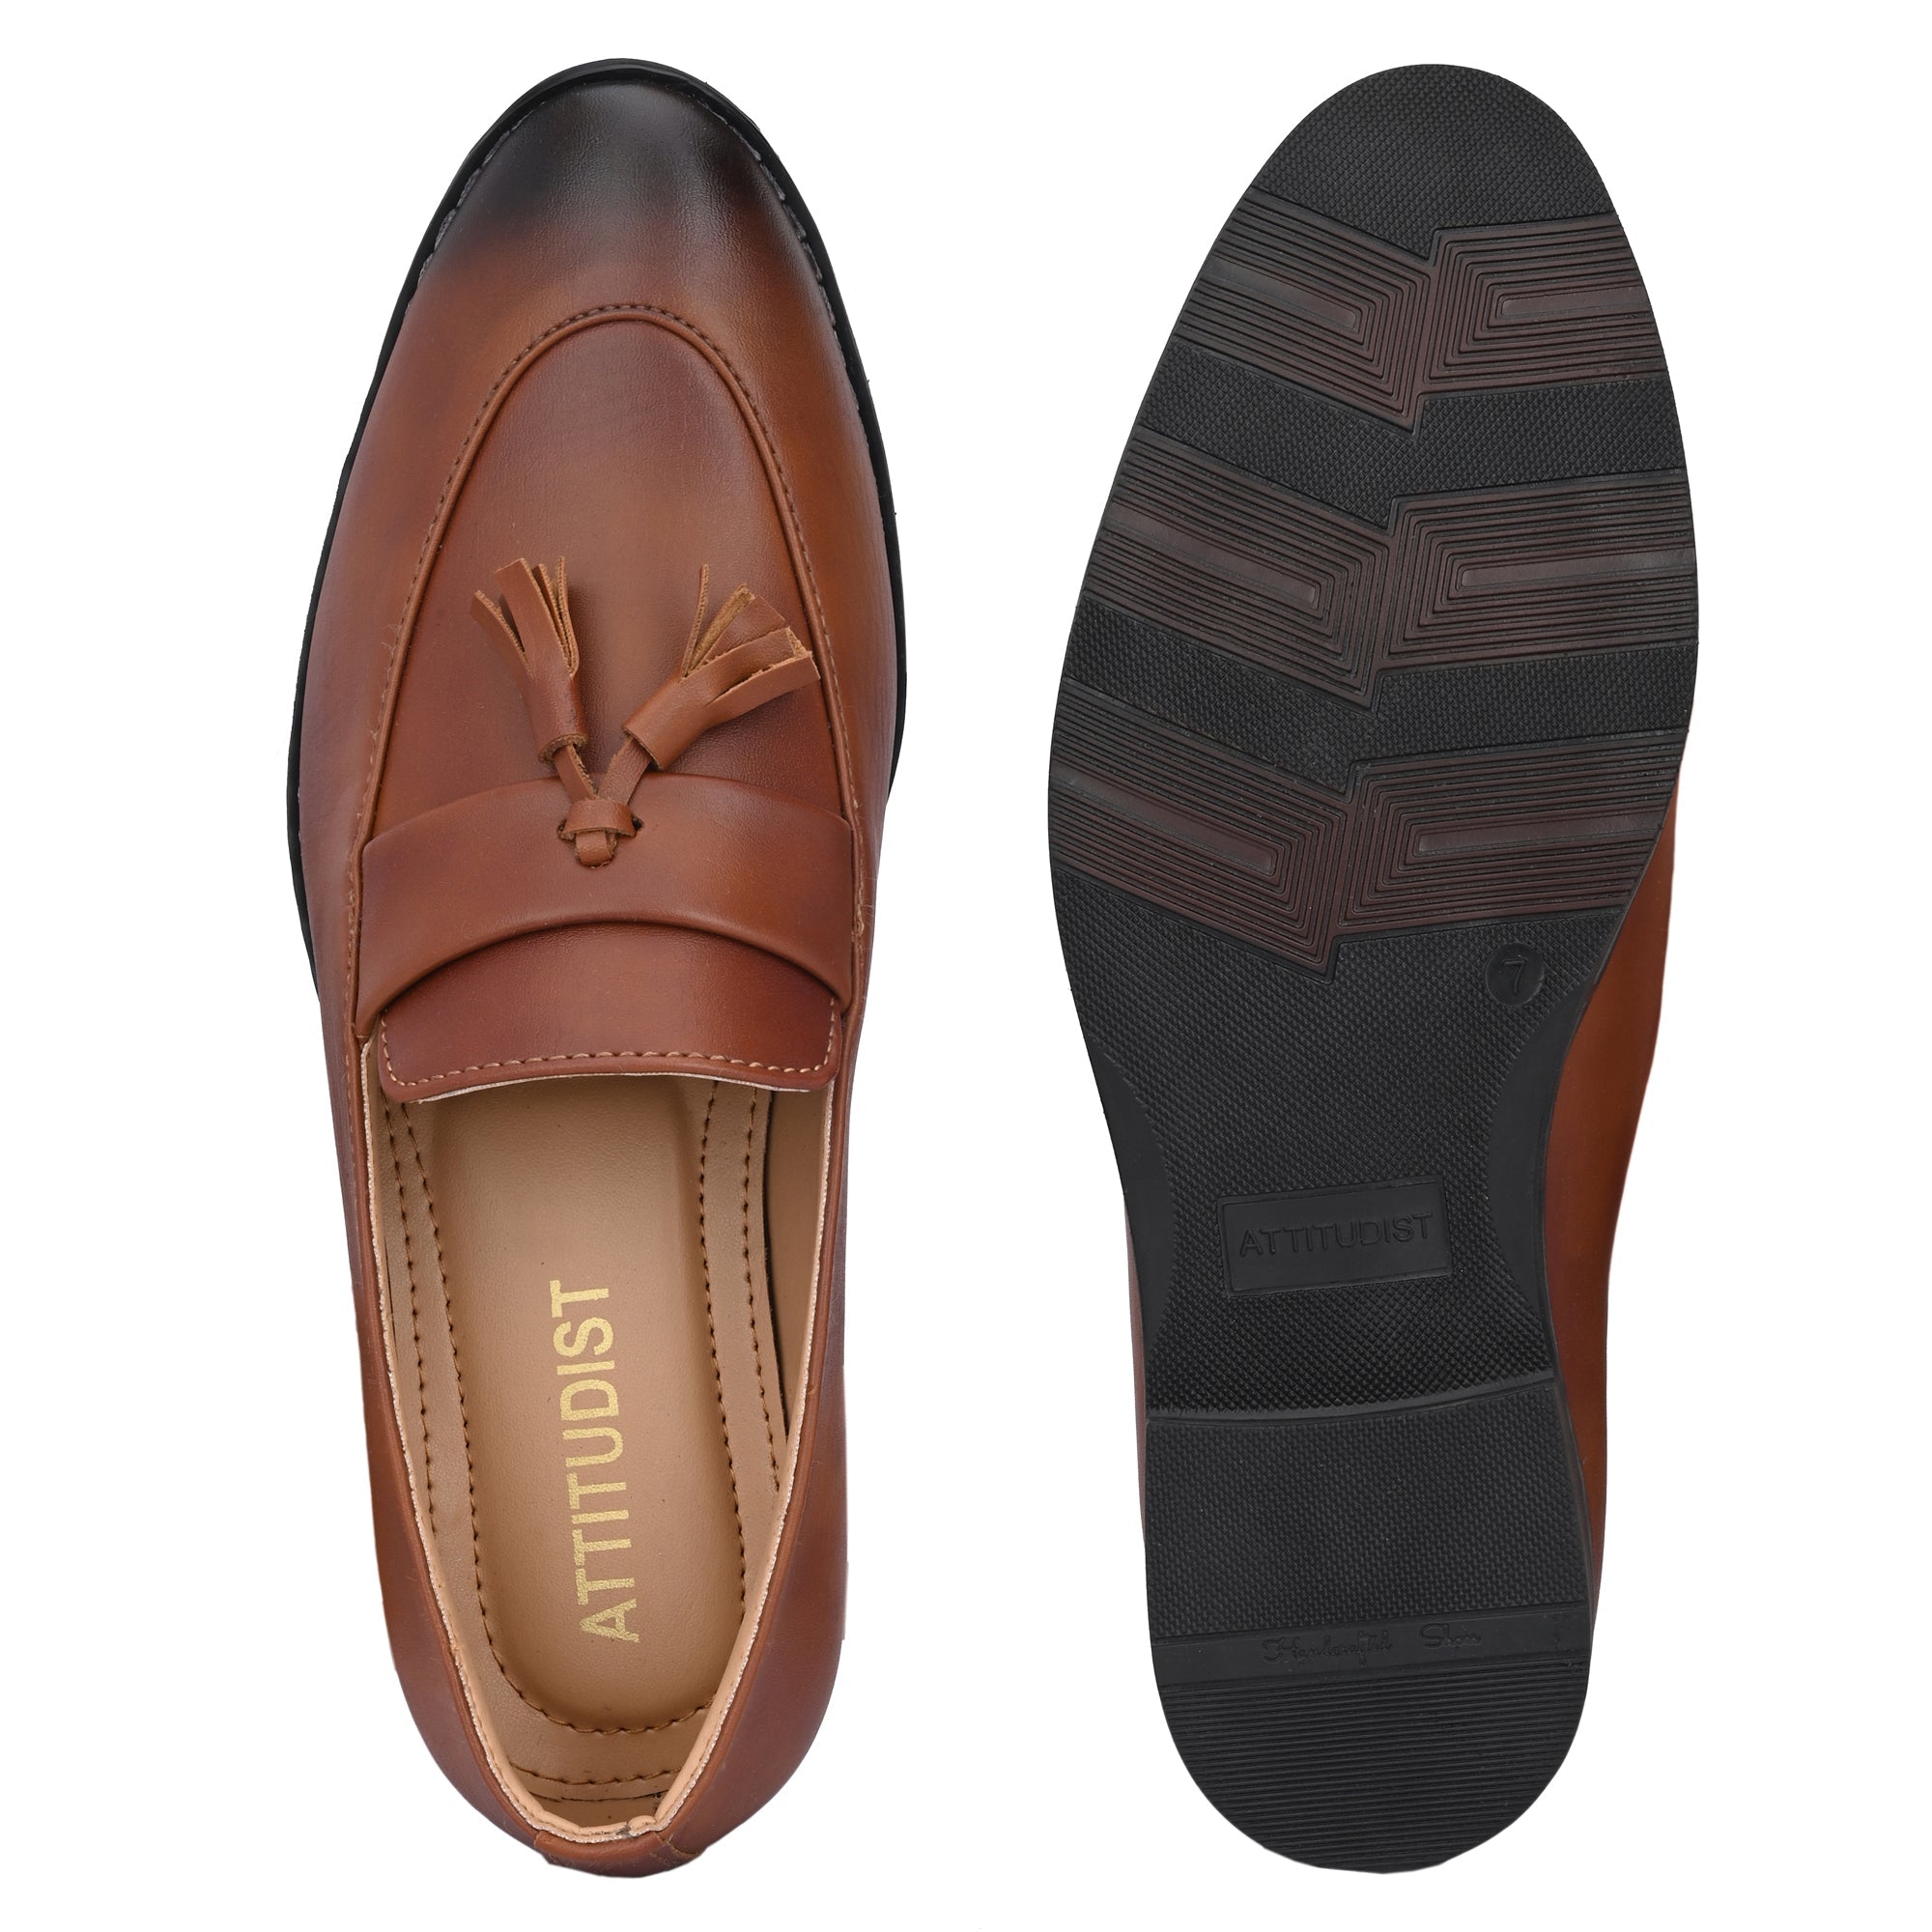 stylish-men-shoes-4047tan